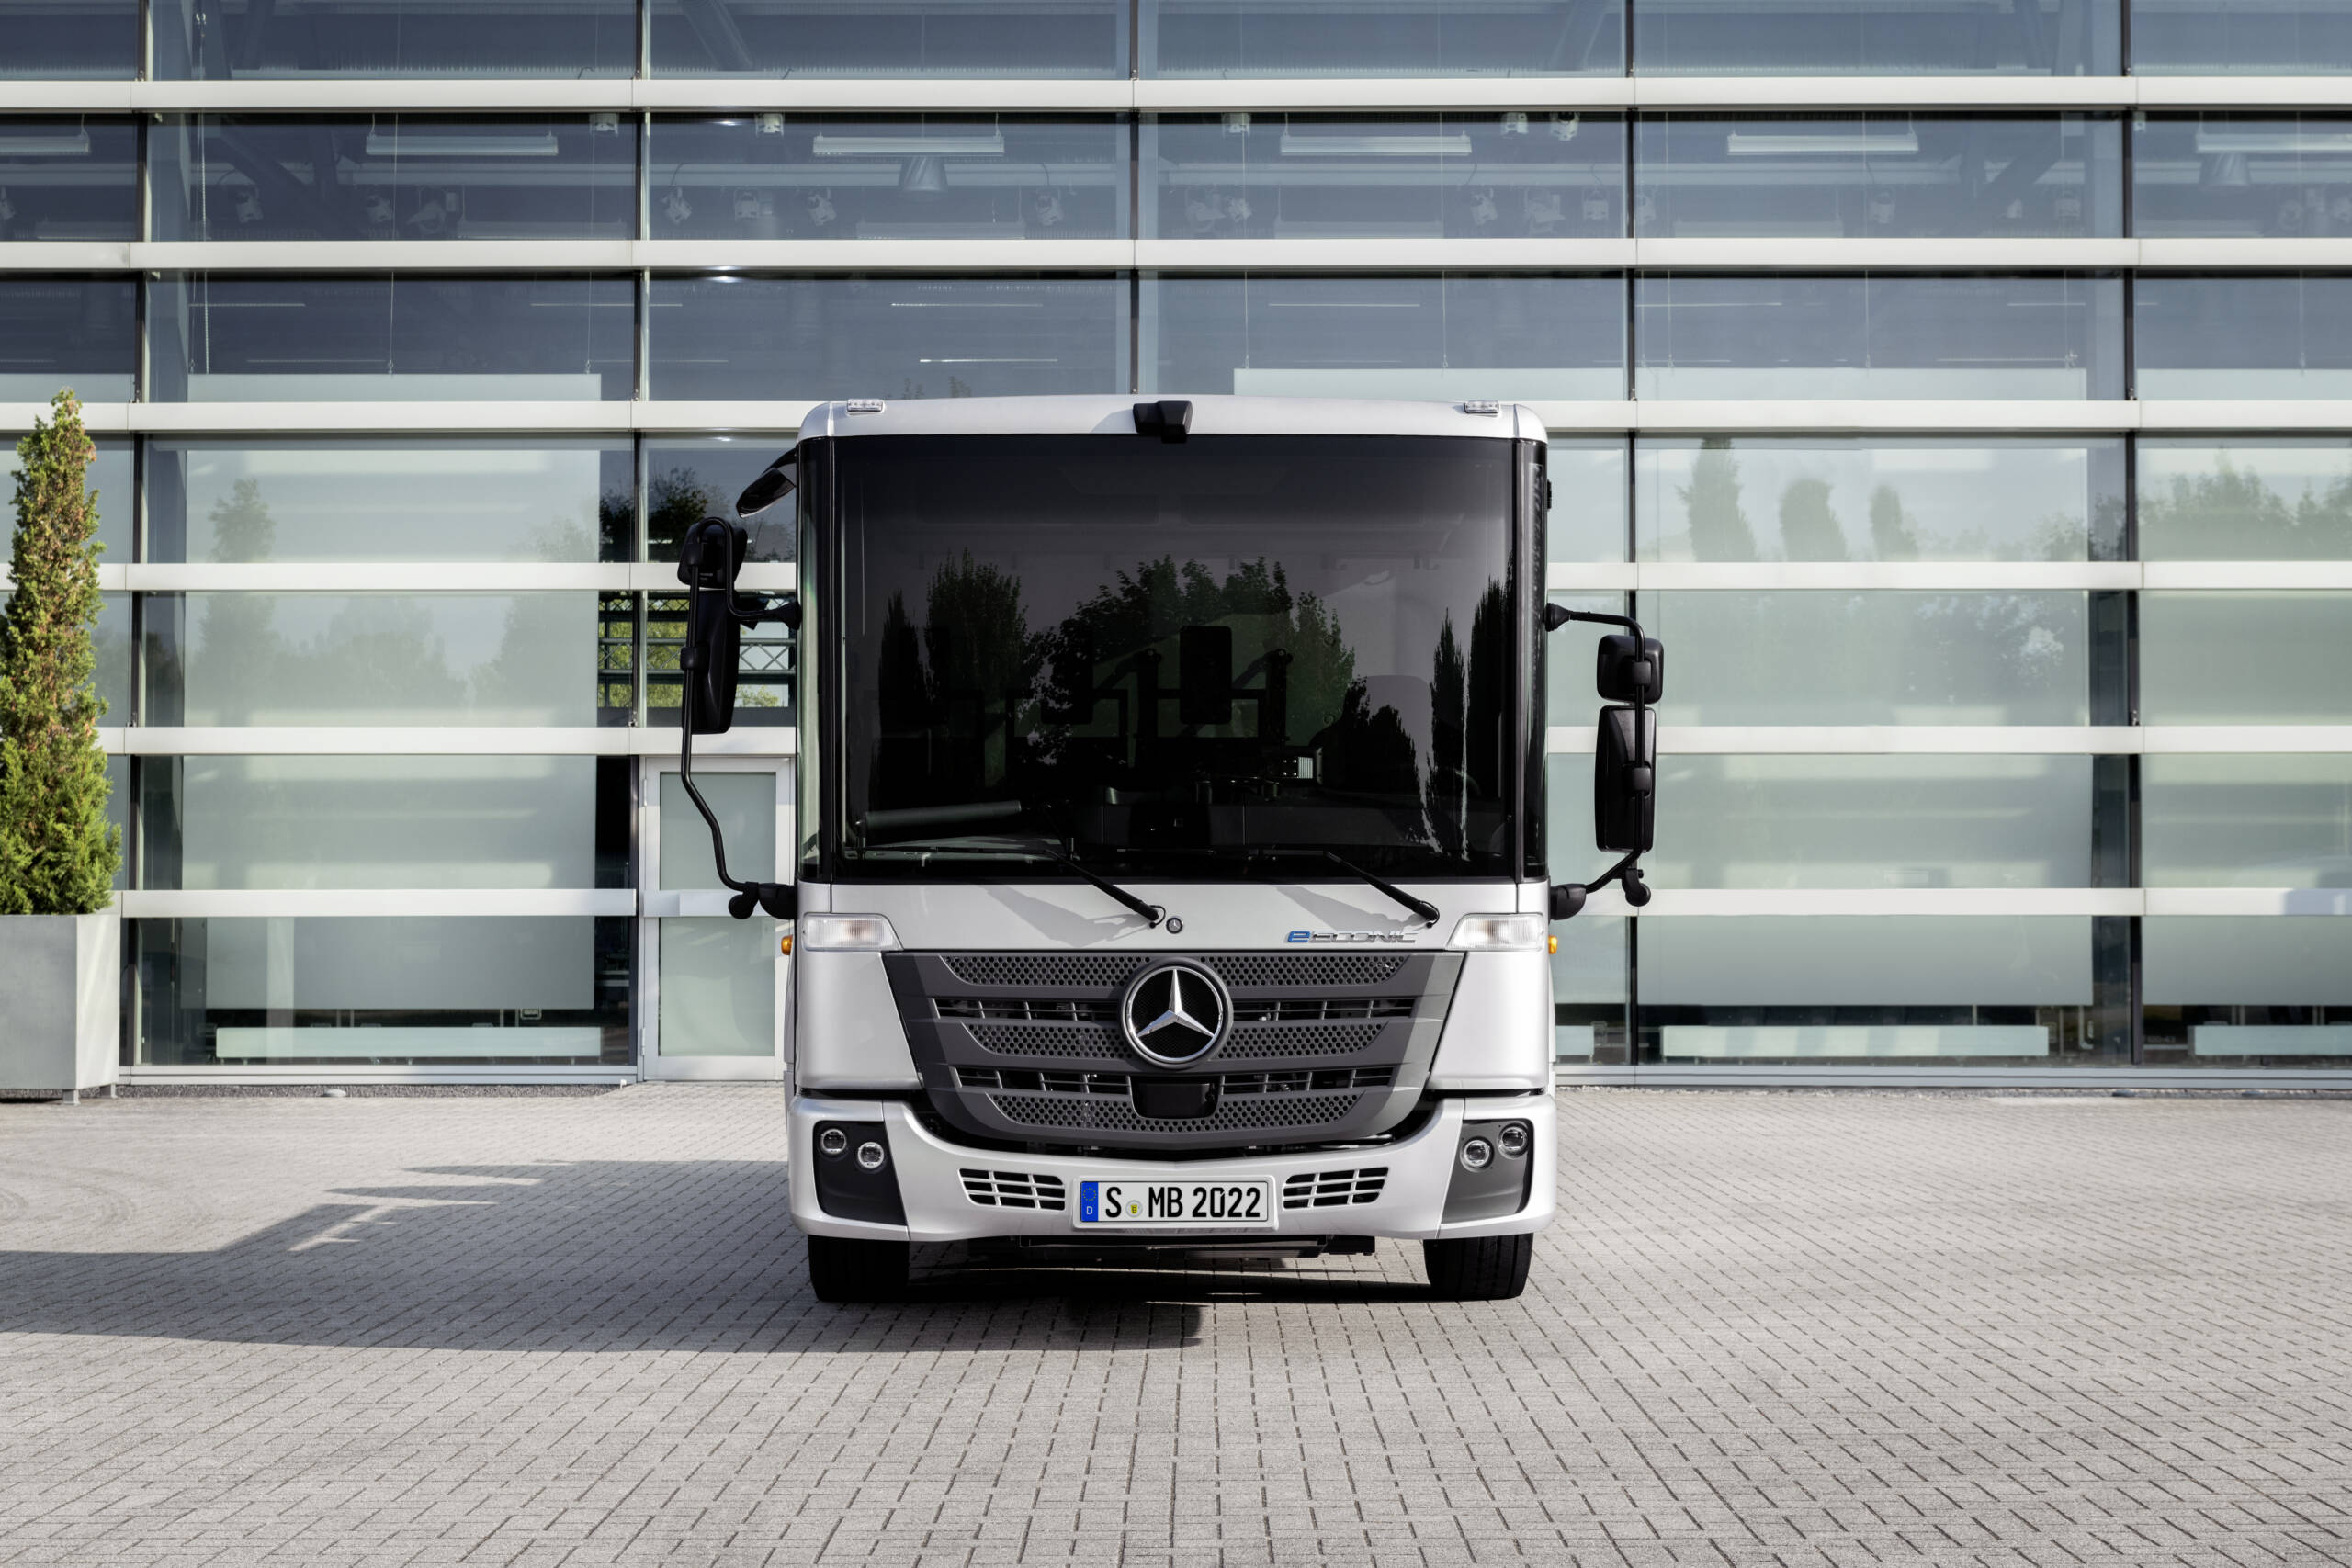 Mercedes-Benz Werk Wörth startet Serienproduktion des eActros in 2021Mercedes-Benz Wörth plant to start series production of the eActros in 2021